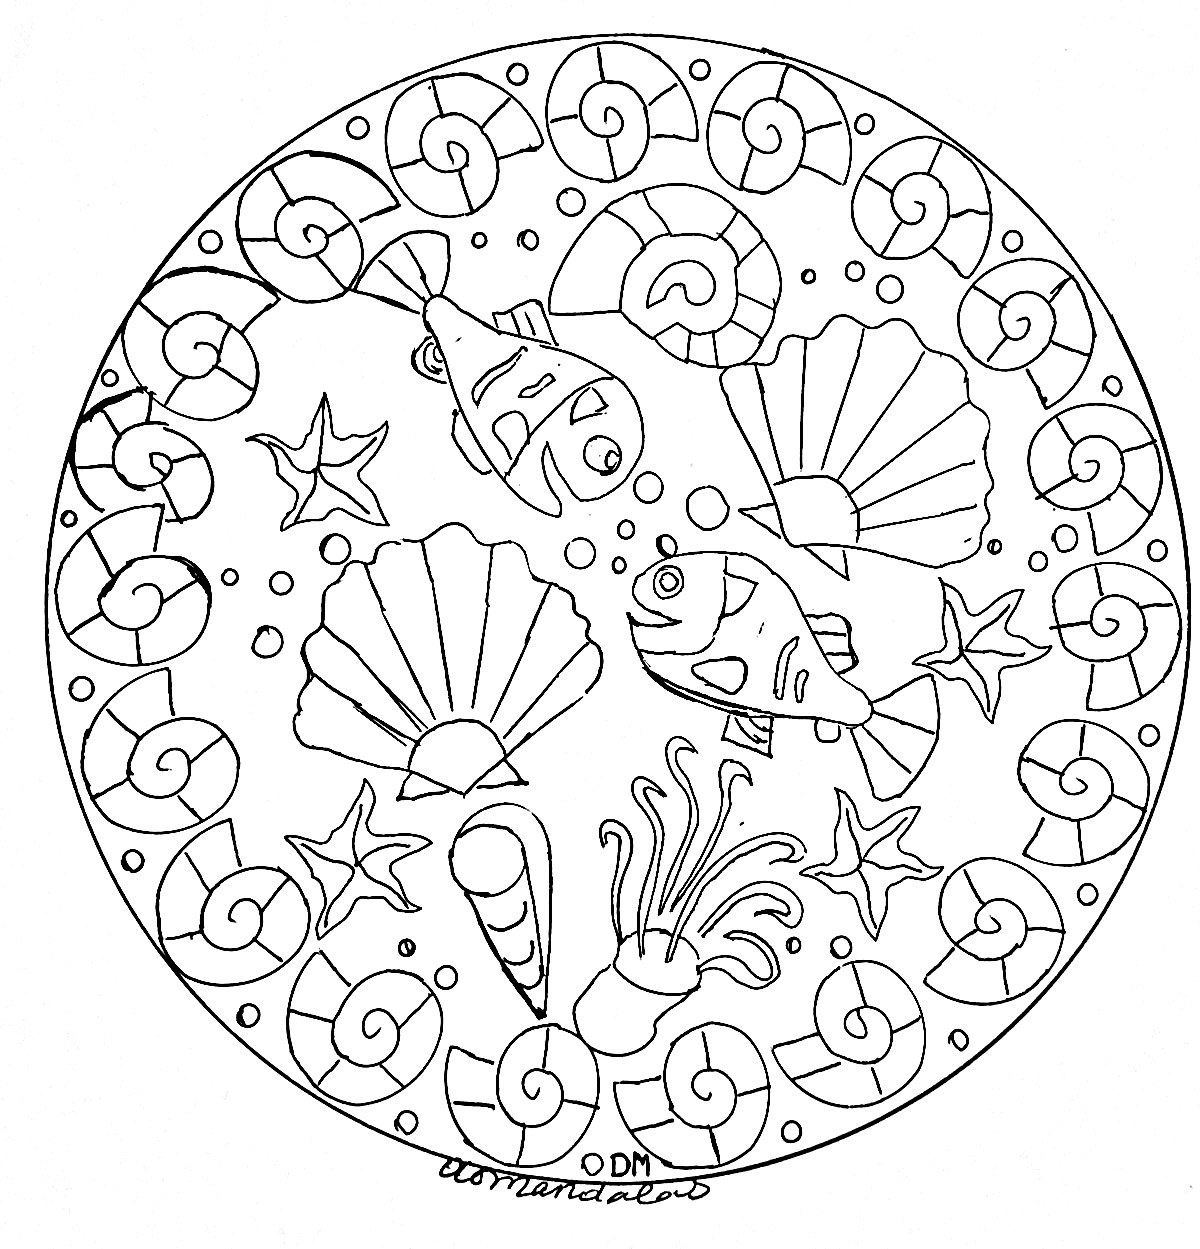 Mandala domandalas seabed - 2 - Mandalas Adult Coloring Pages